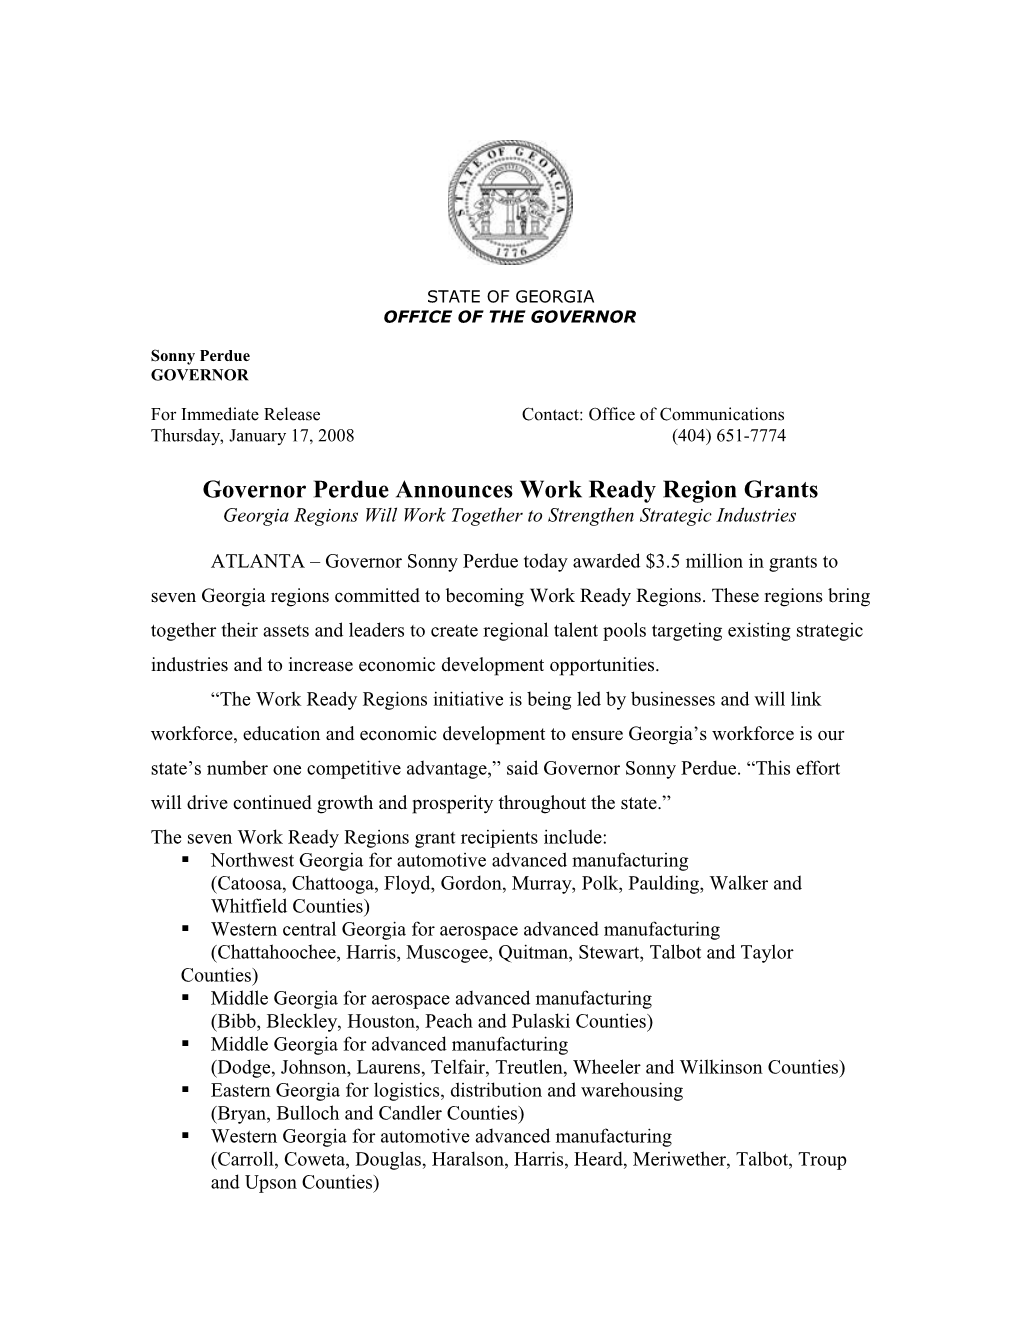 Governor Perdue Announces Work Ready Region Grants